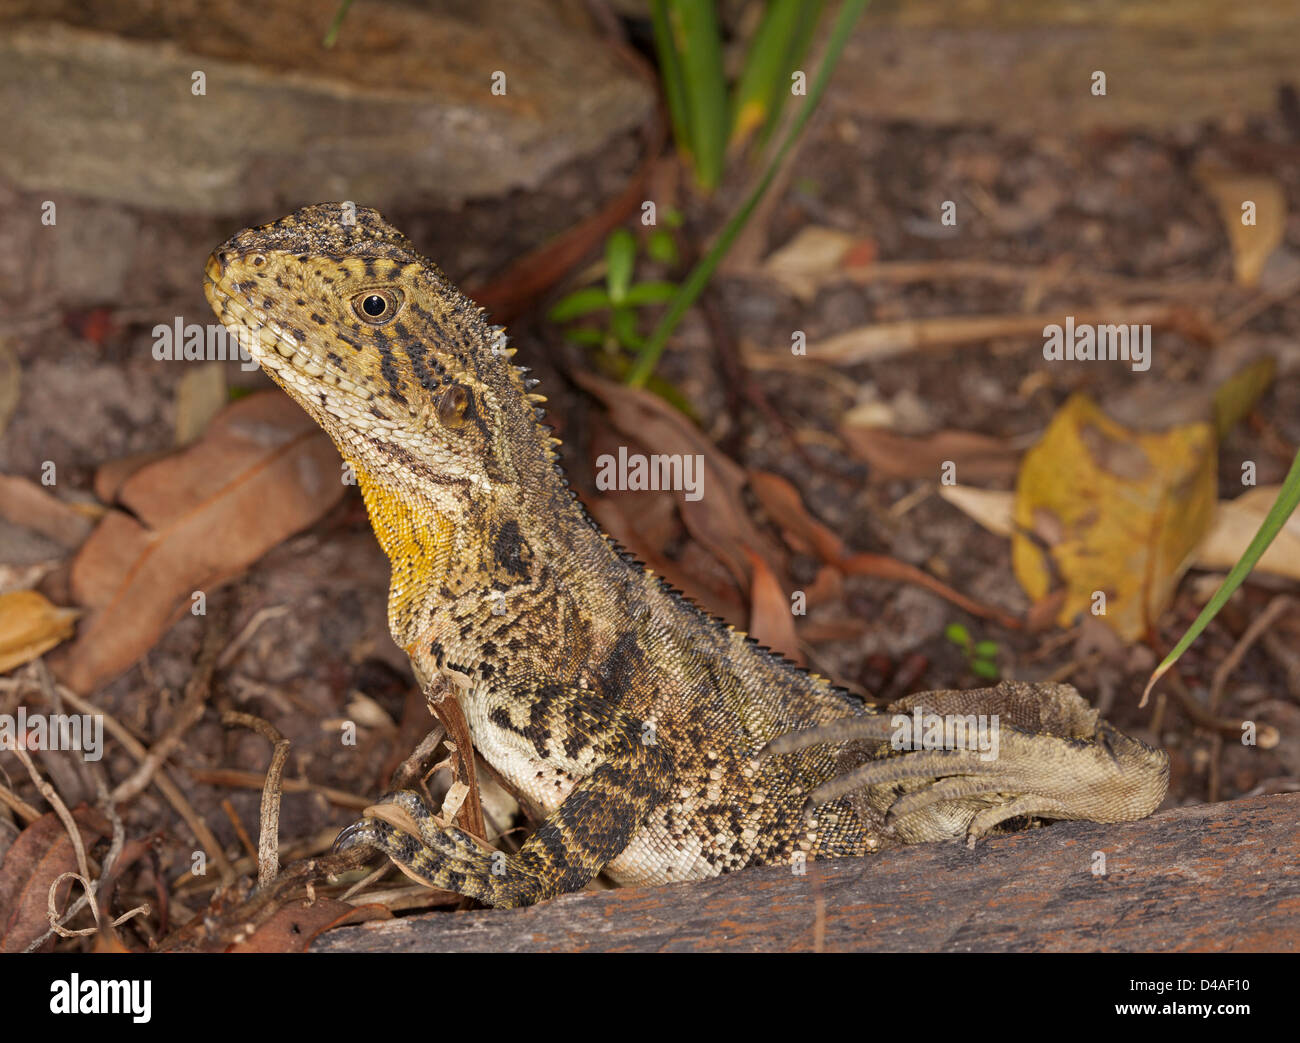 Young Australian eastern water dragon lizard among rocks and fallen leaves in bushland Stock Photo